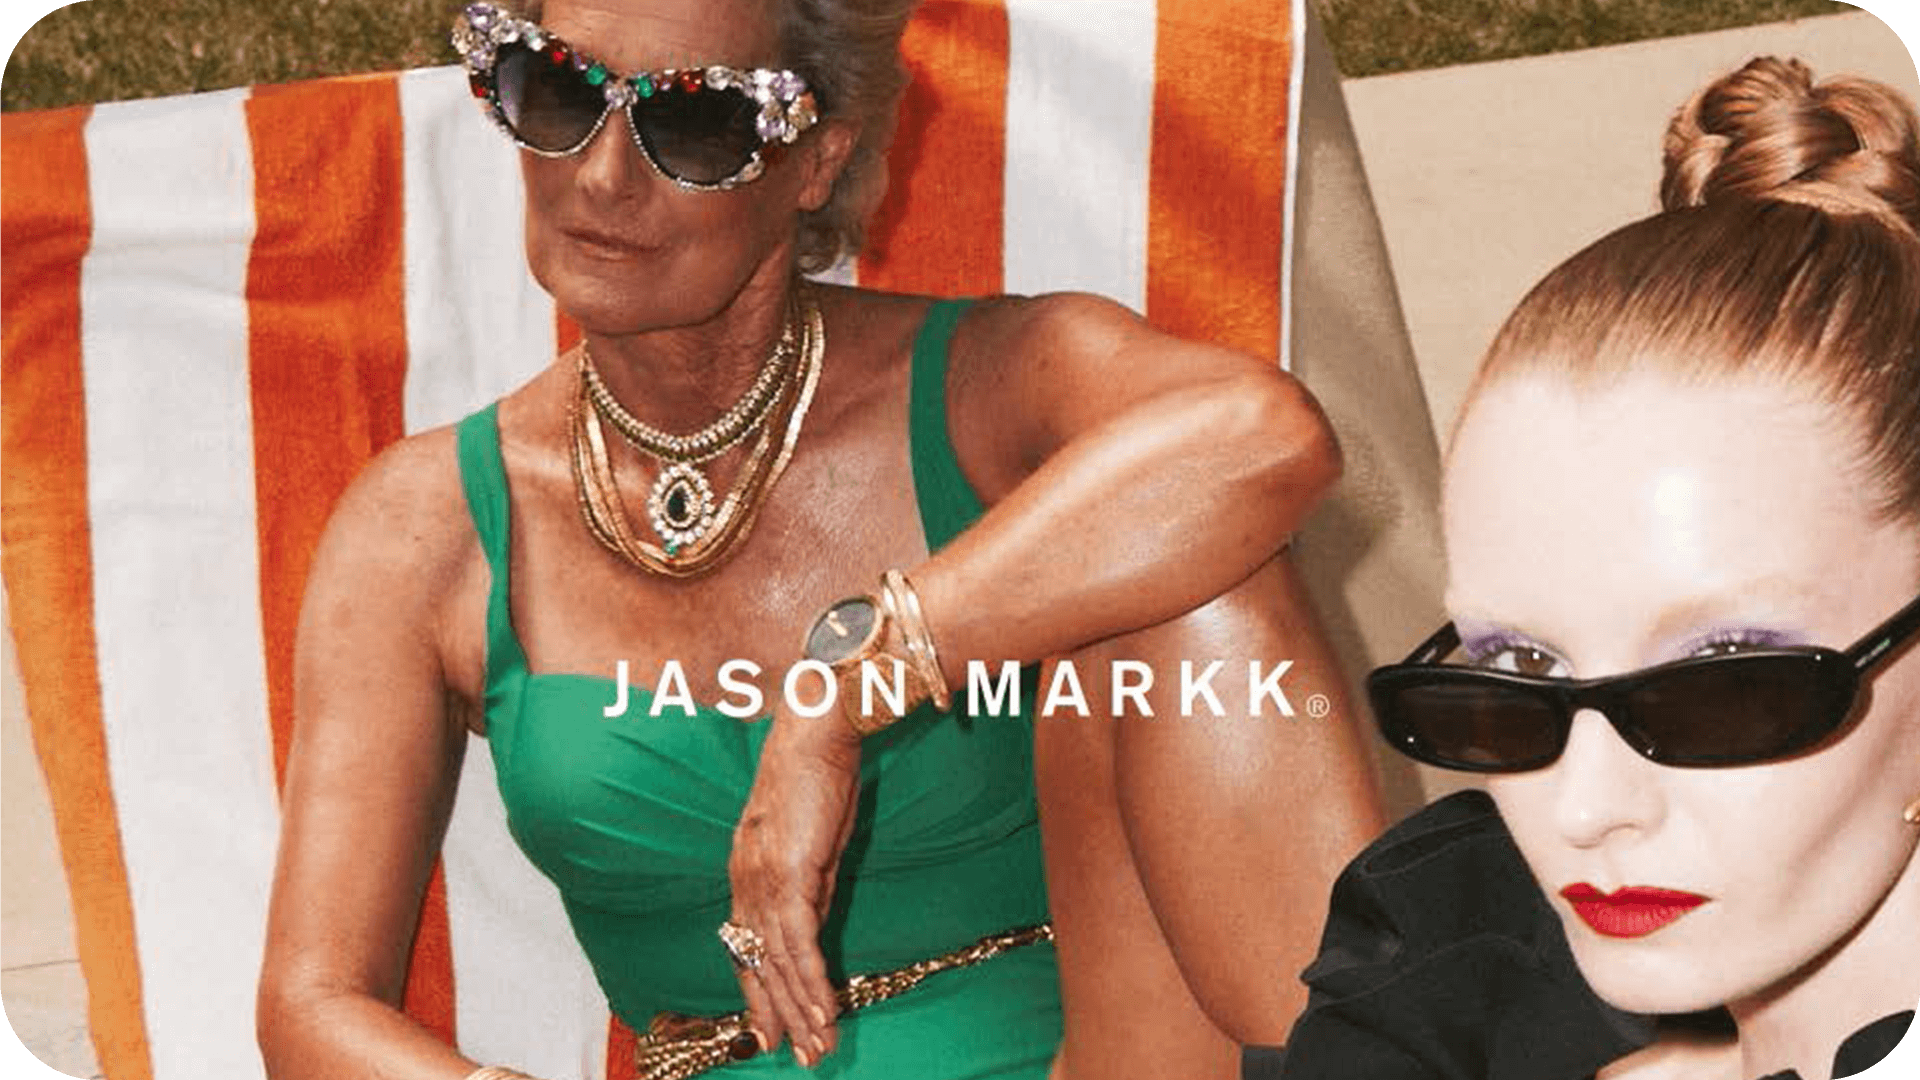 Jason Markk - Take care of your leather